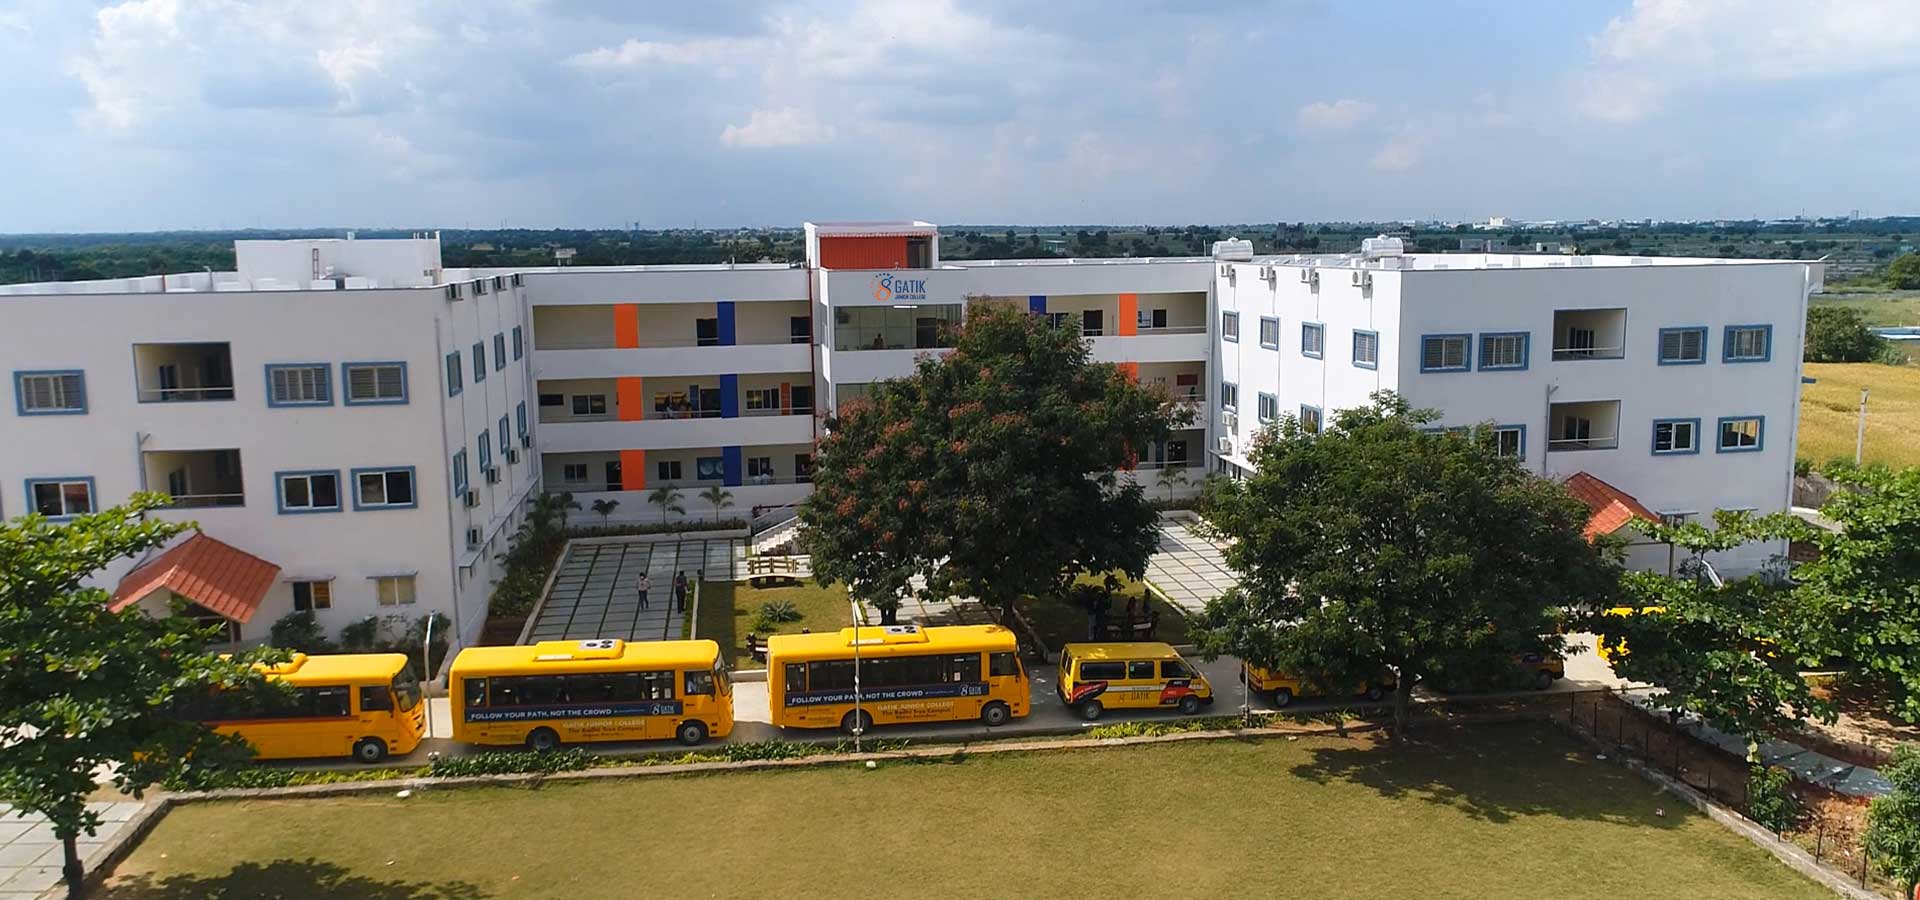 Best Junior Colleges in Hyderabad